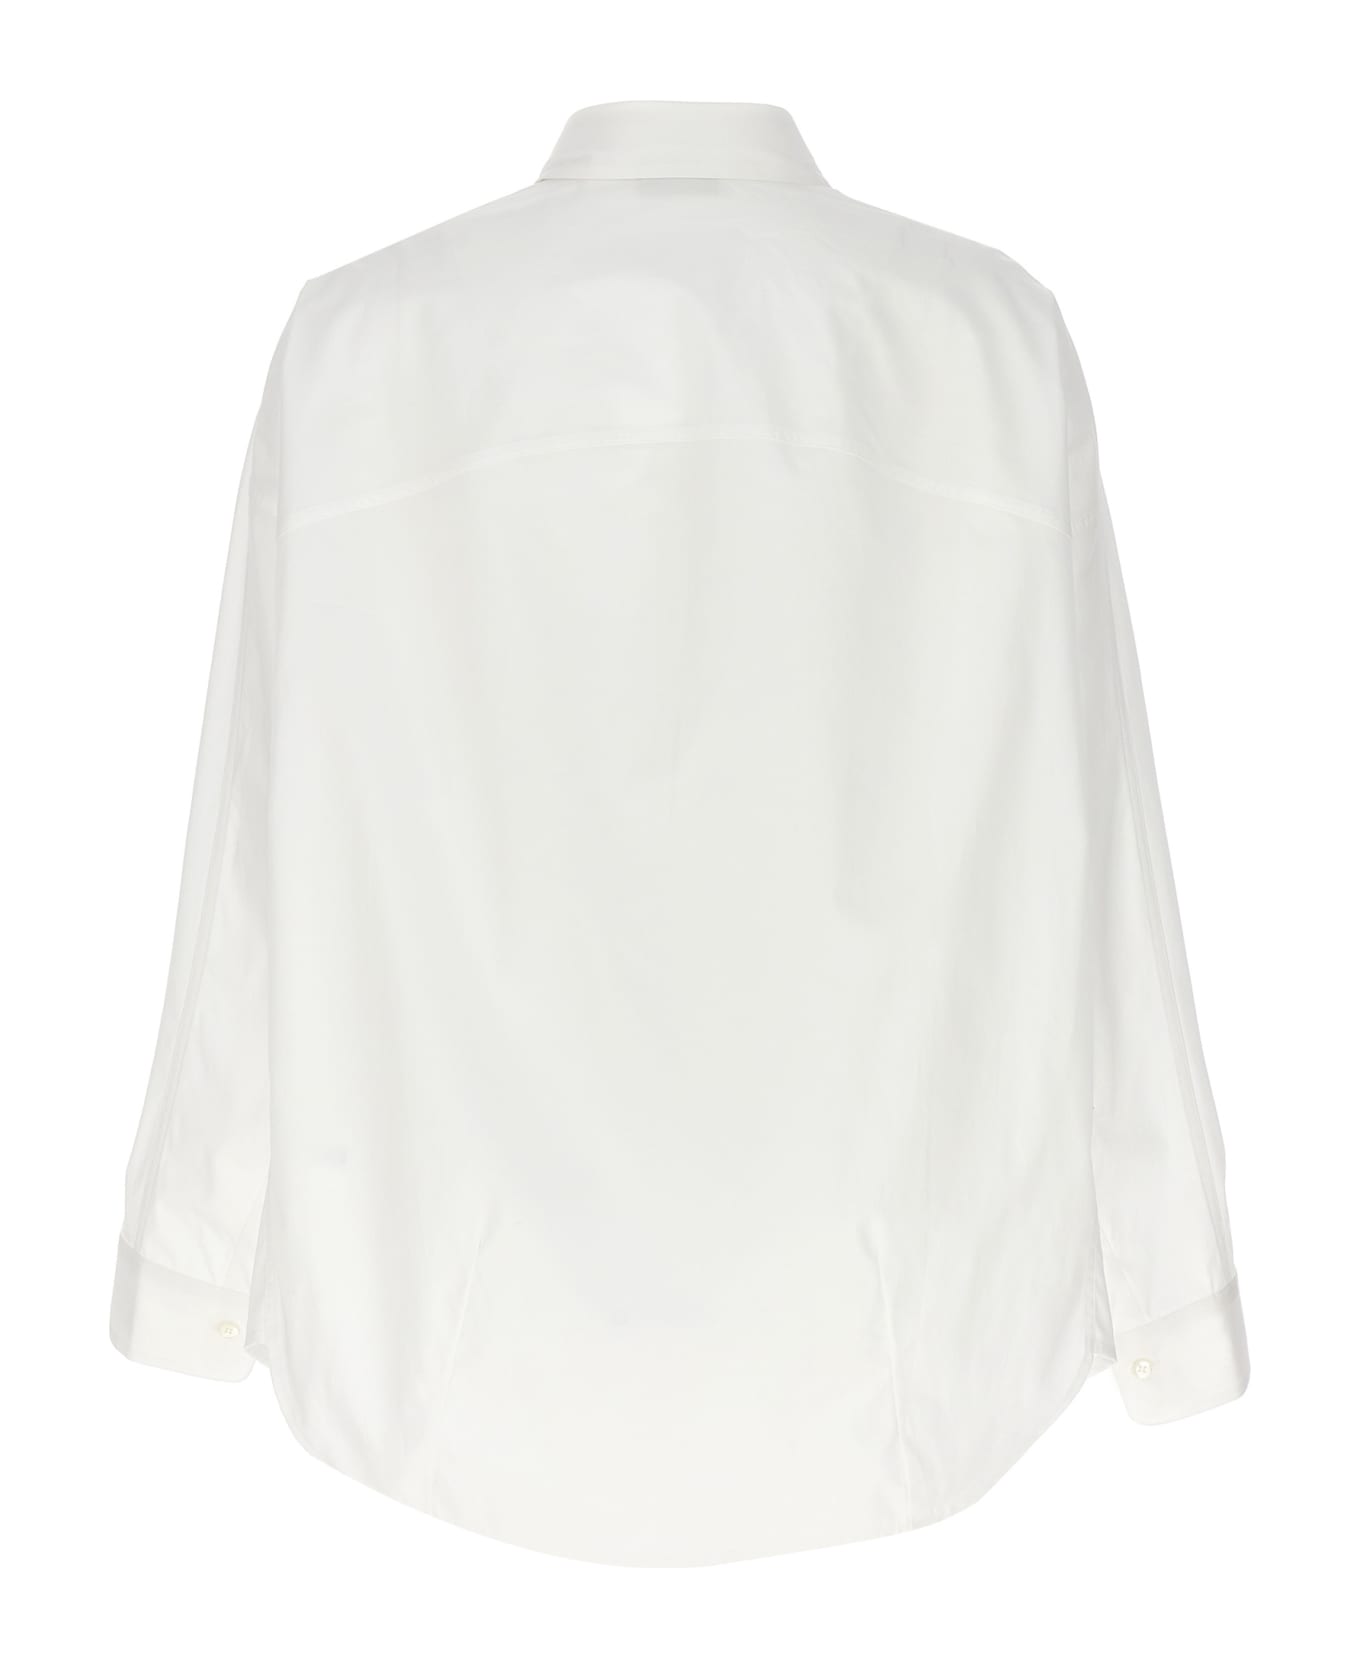 Dries Van Noten 'casio' Shirt - White シャツ